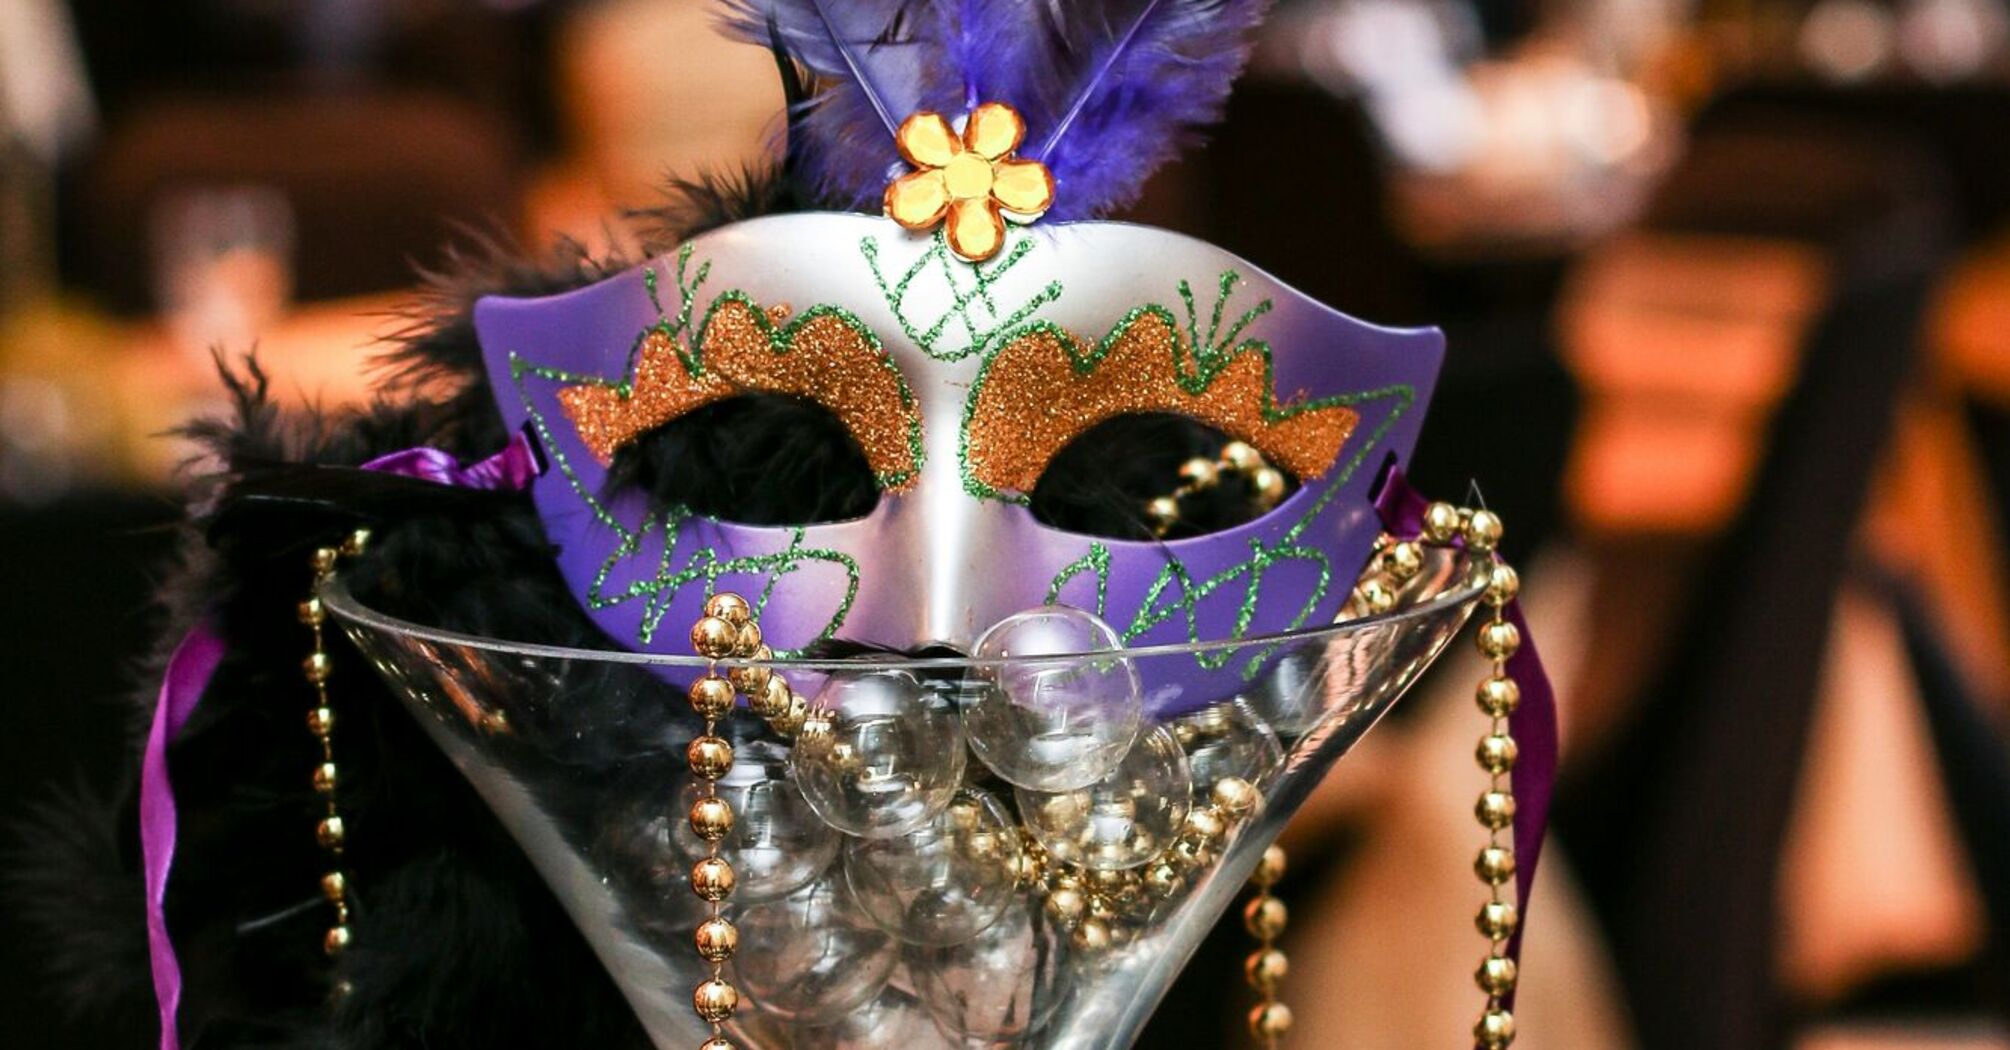 A decorative Mardi Gras mask and beads, evoking the festive spirit of SeaWorld Orlando's Mardi Gras celebration